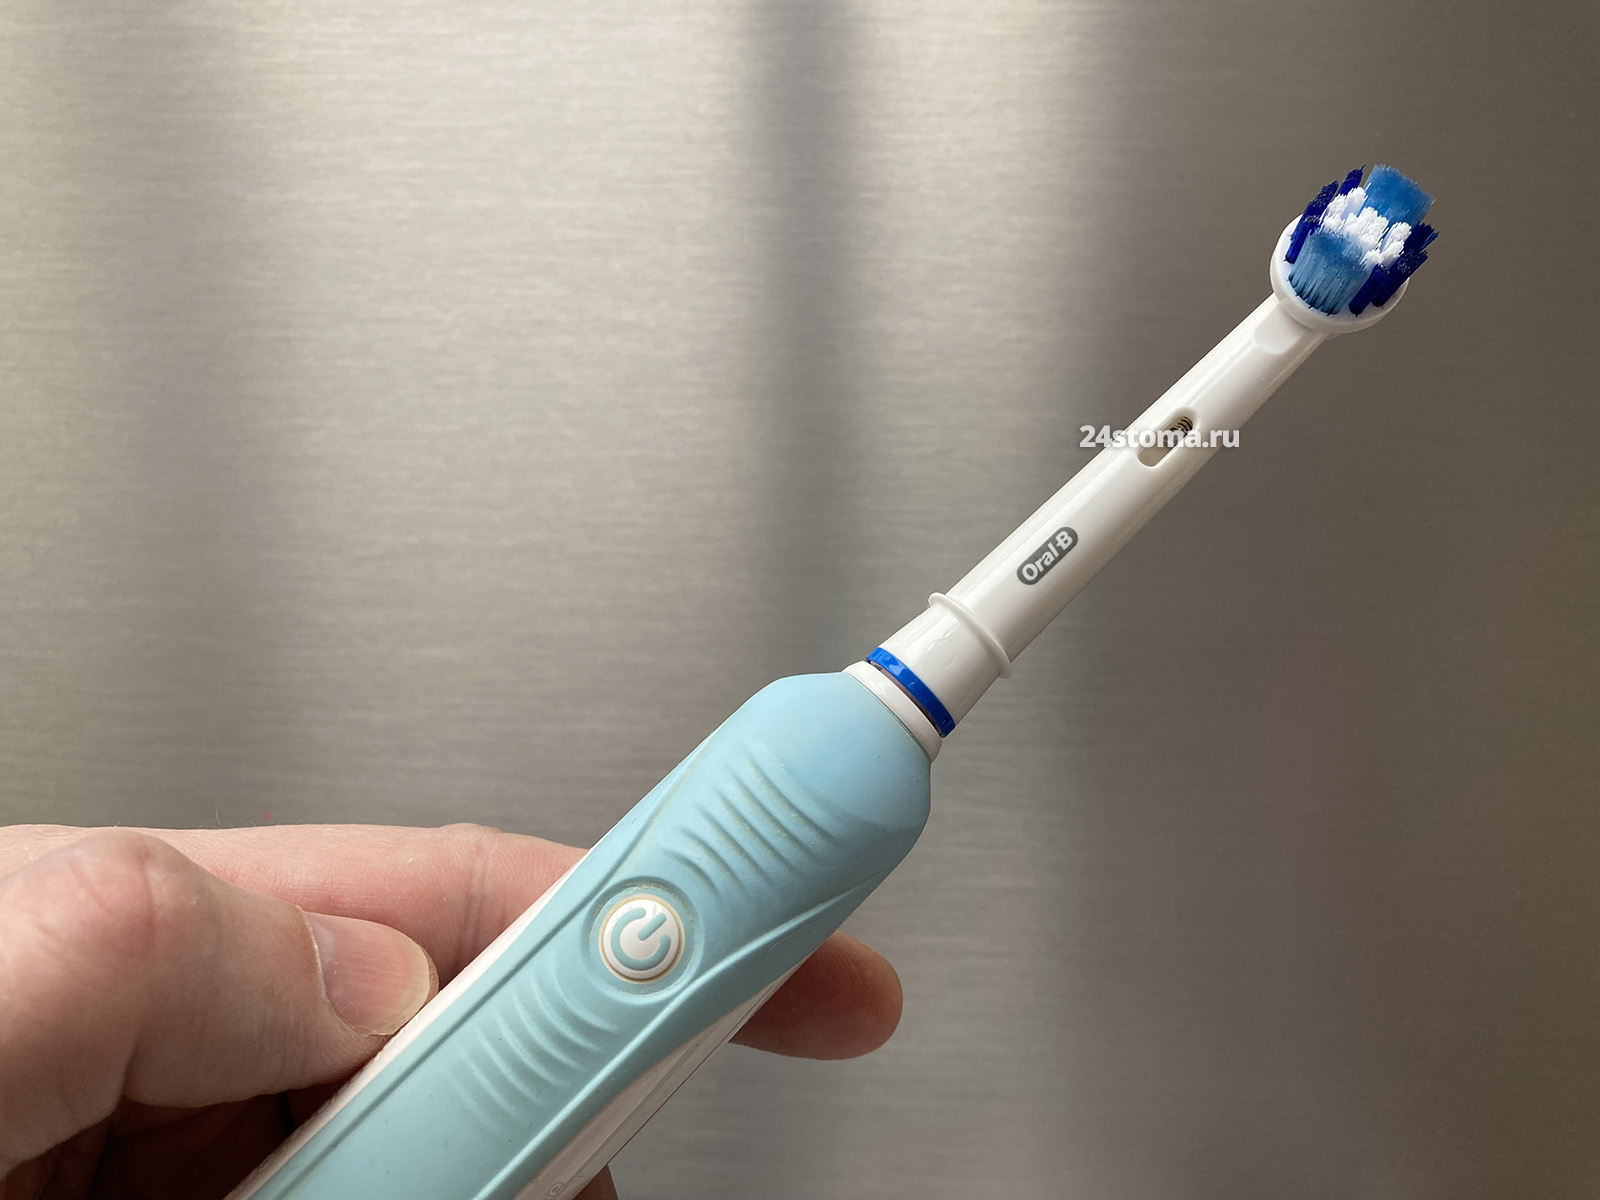 Электрическая зубная щётка Oral-b PPO 500 – с насадкой «Precision-Clean».